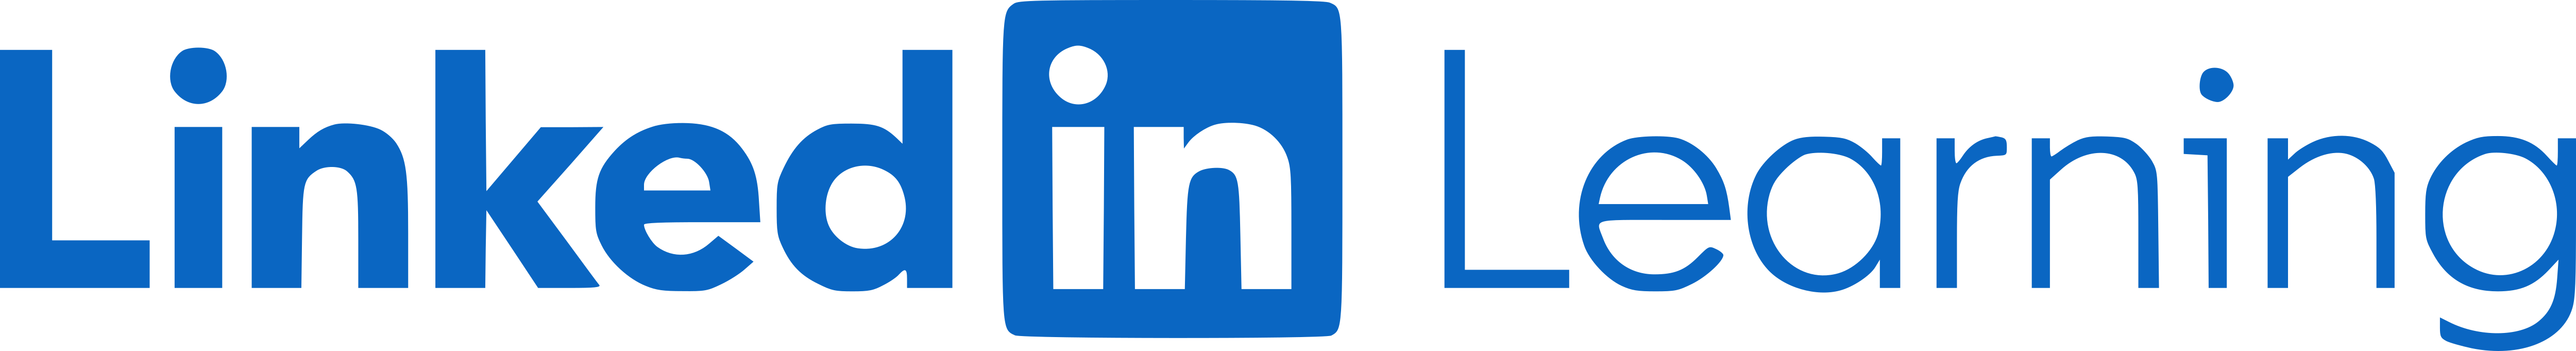 Linkedin learning logo